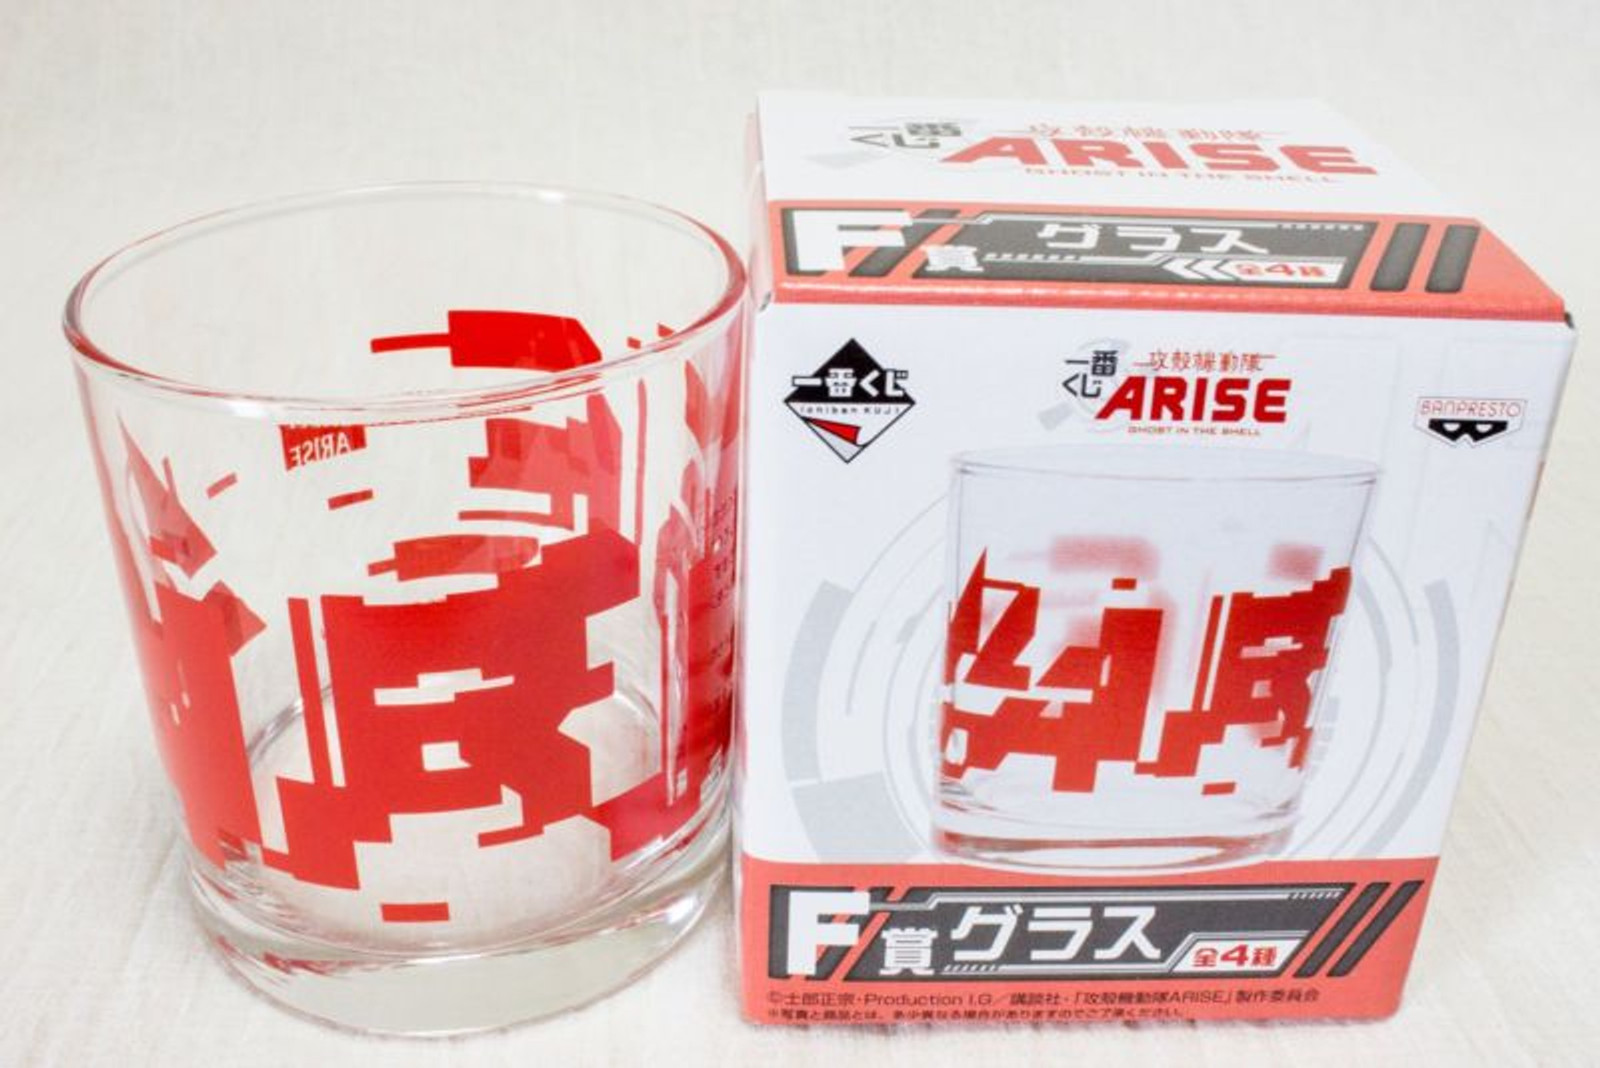 Ghost in the Shell ARISE Glass Ichiban Kuji Banpresto 2 JAPAN ANIME MANGA